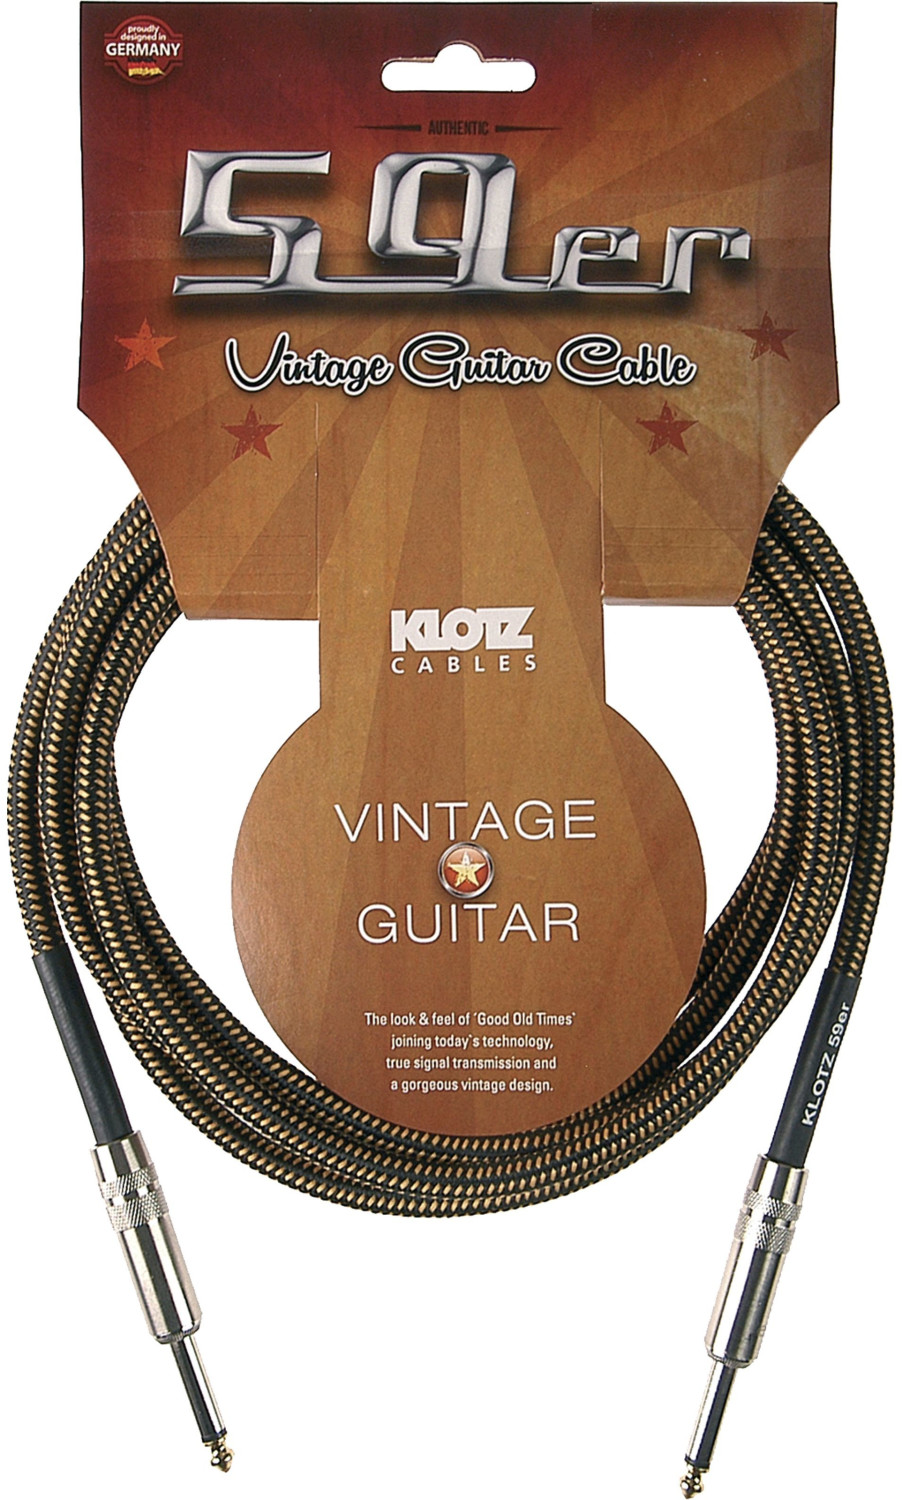 Photos - Cable (video, audio, USB) Klotz a-i-s Klotz Vintage Gitarrenkabel 4,5m gerade gelb/schwarz